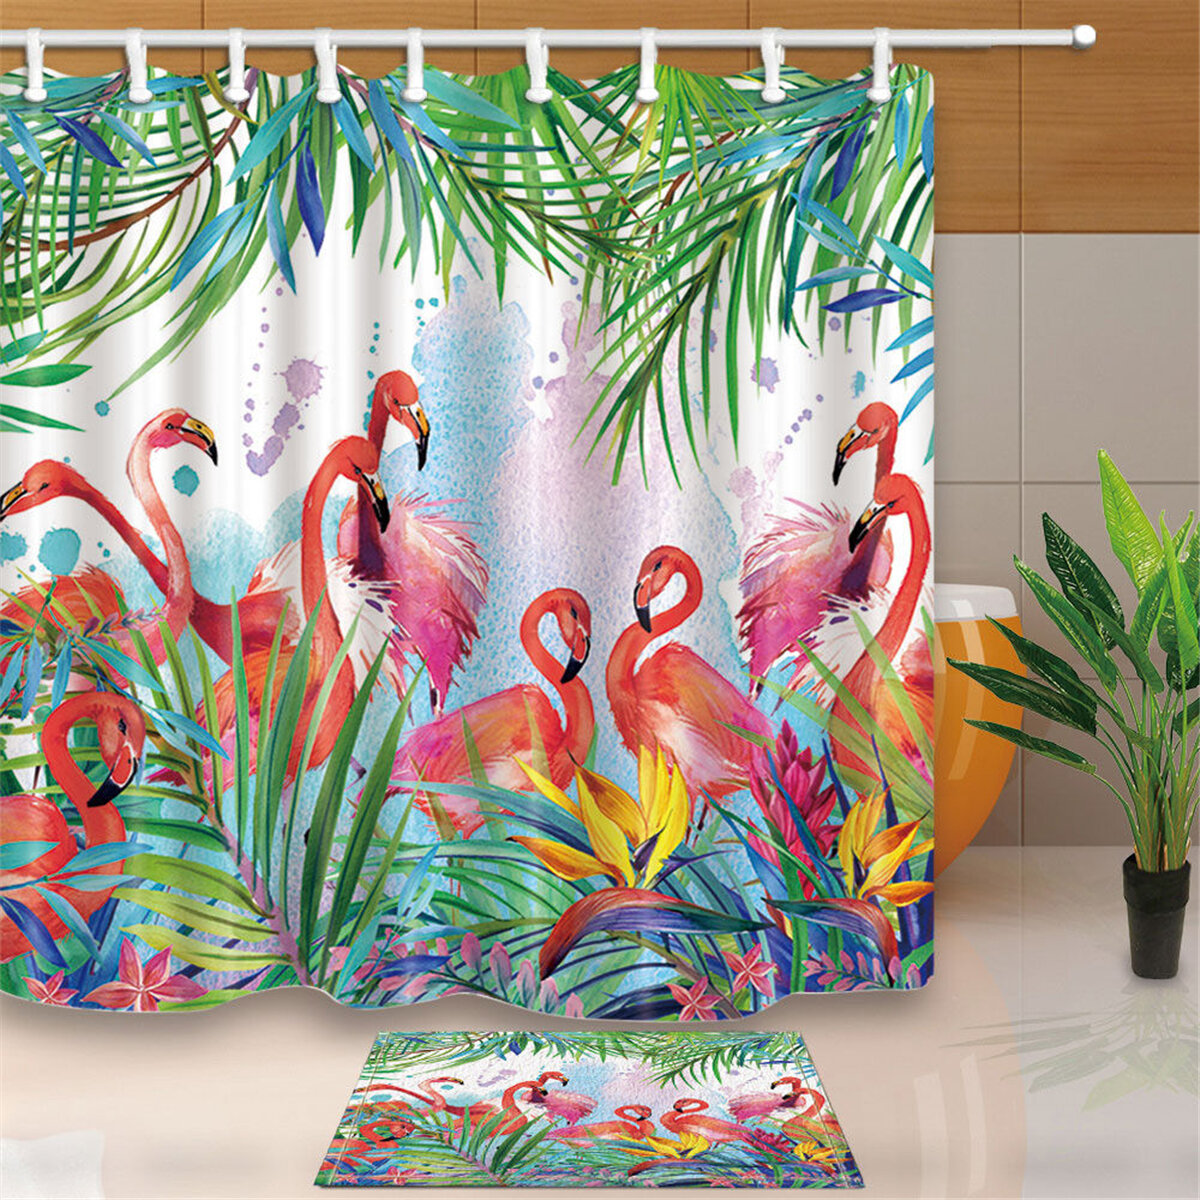 Tropical Flowers And Flamingo Theme Bathroom Shower Curtain Waterproof Fabric & 12hooks